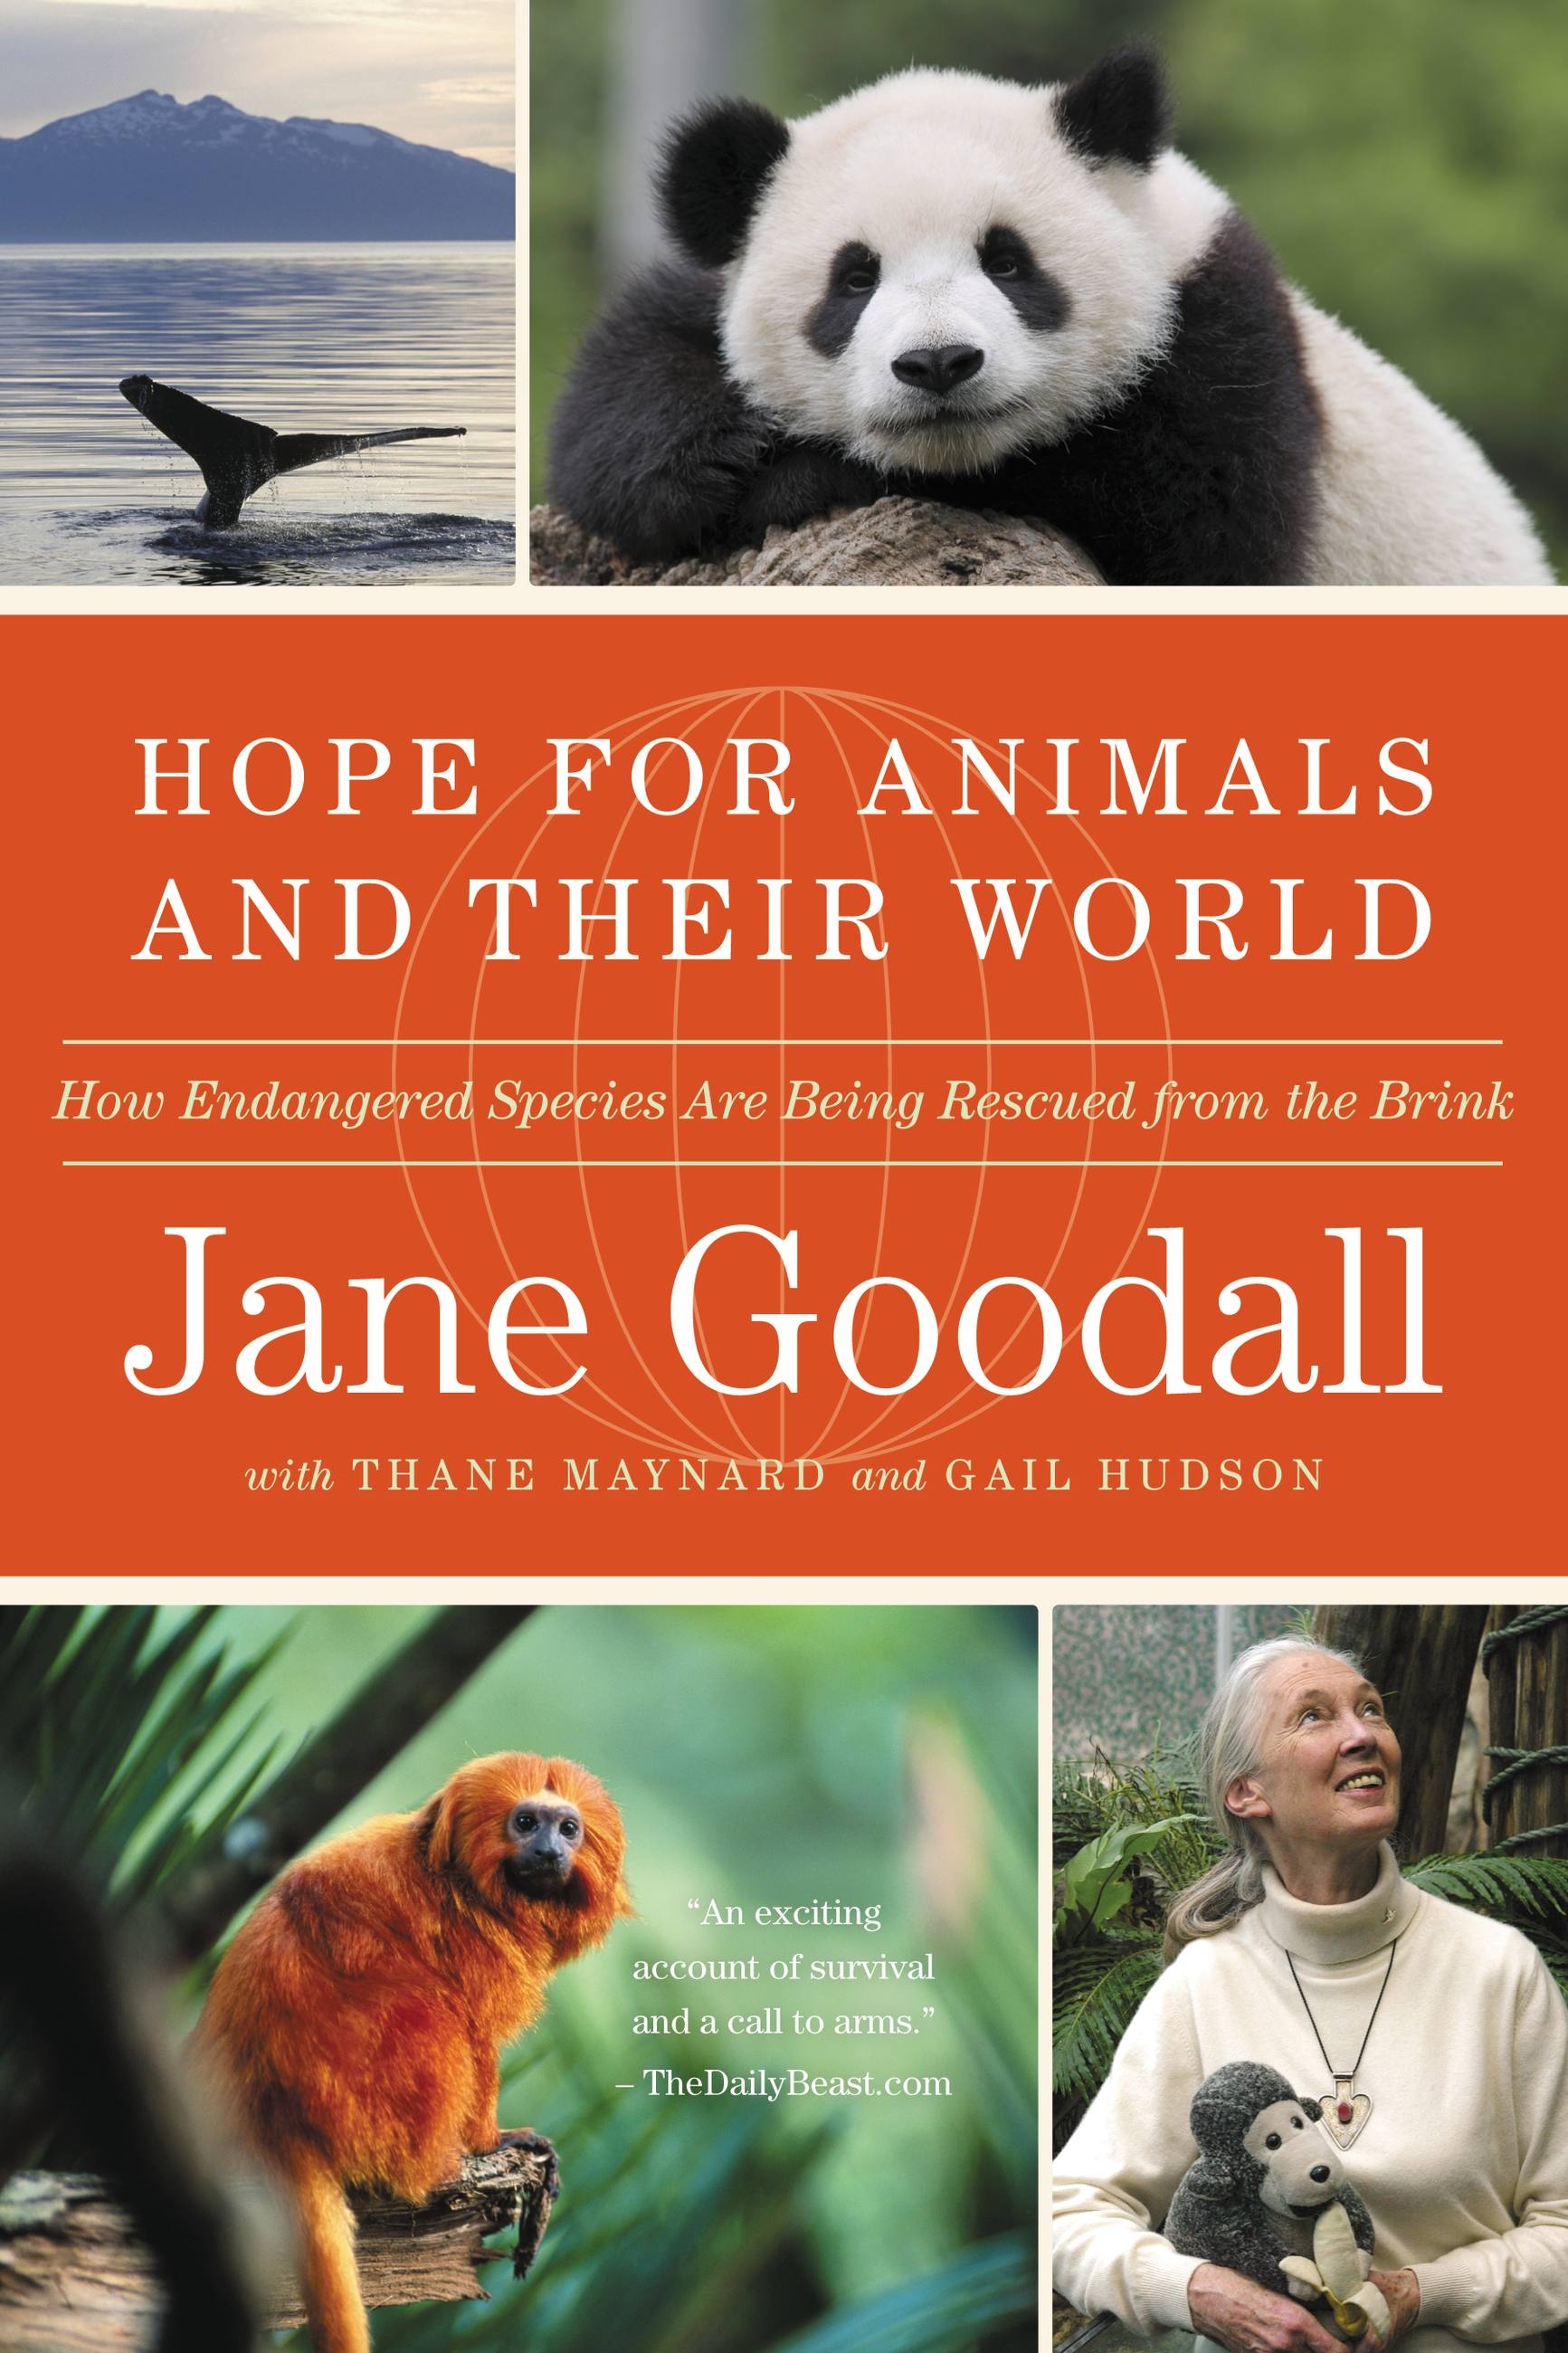 Disappearing animals. Джейн Гудолл книги. Книга о заботе о животных. Hope for animals. Reasons for the disappearance of animals.